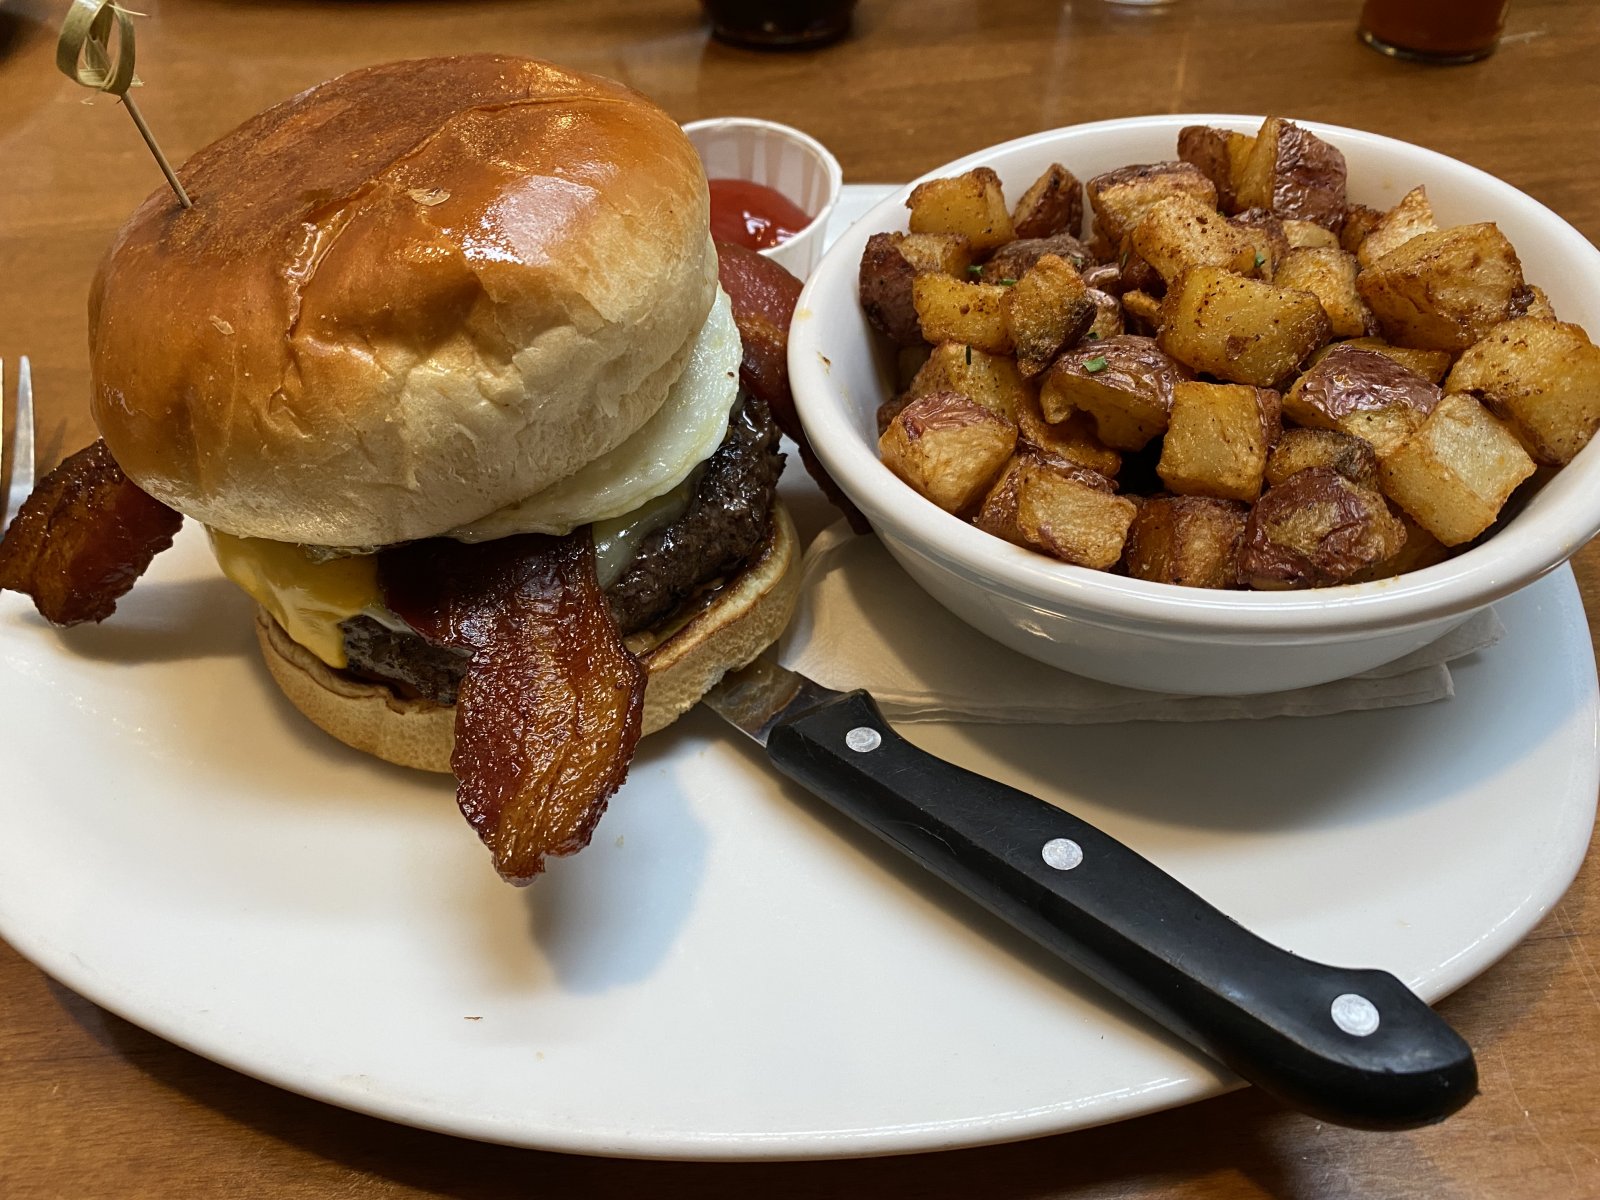 Bangin’ Burger and Crispy Fries